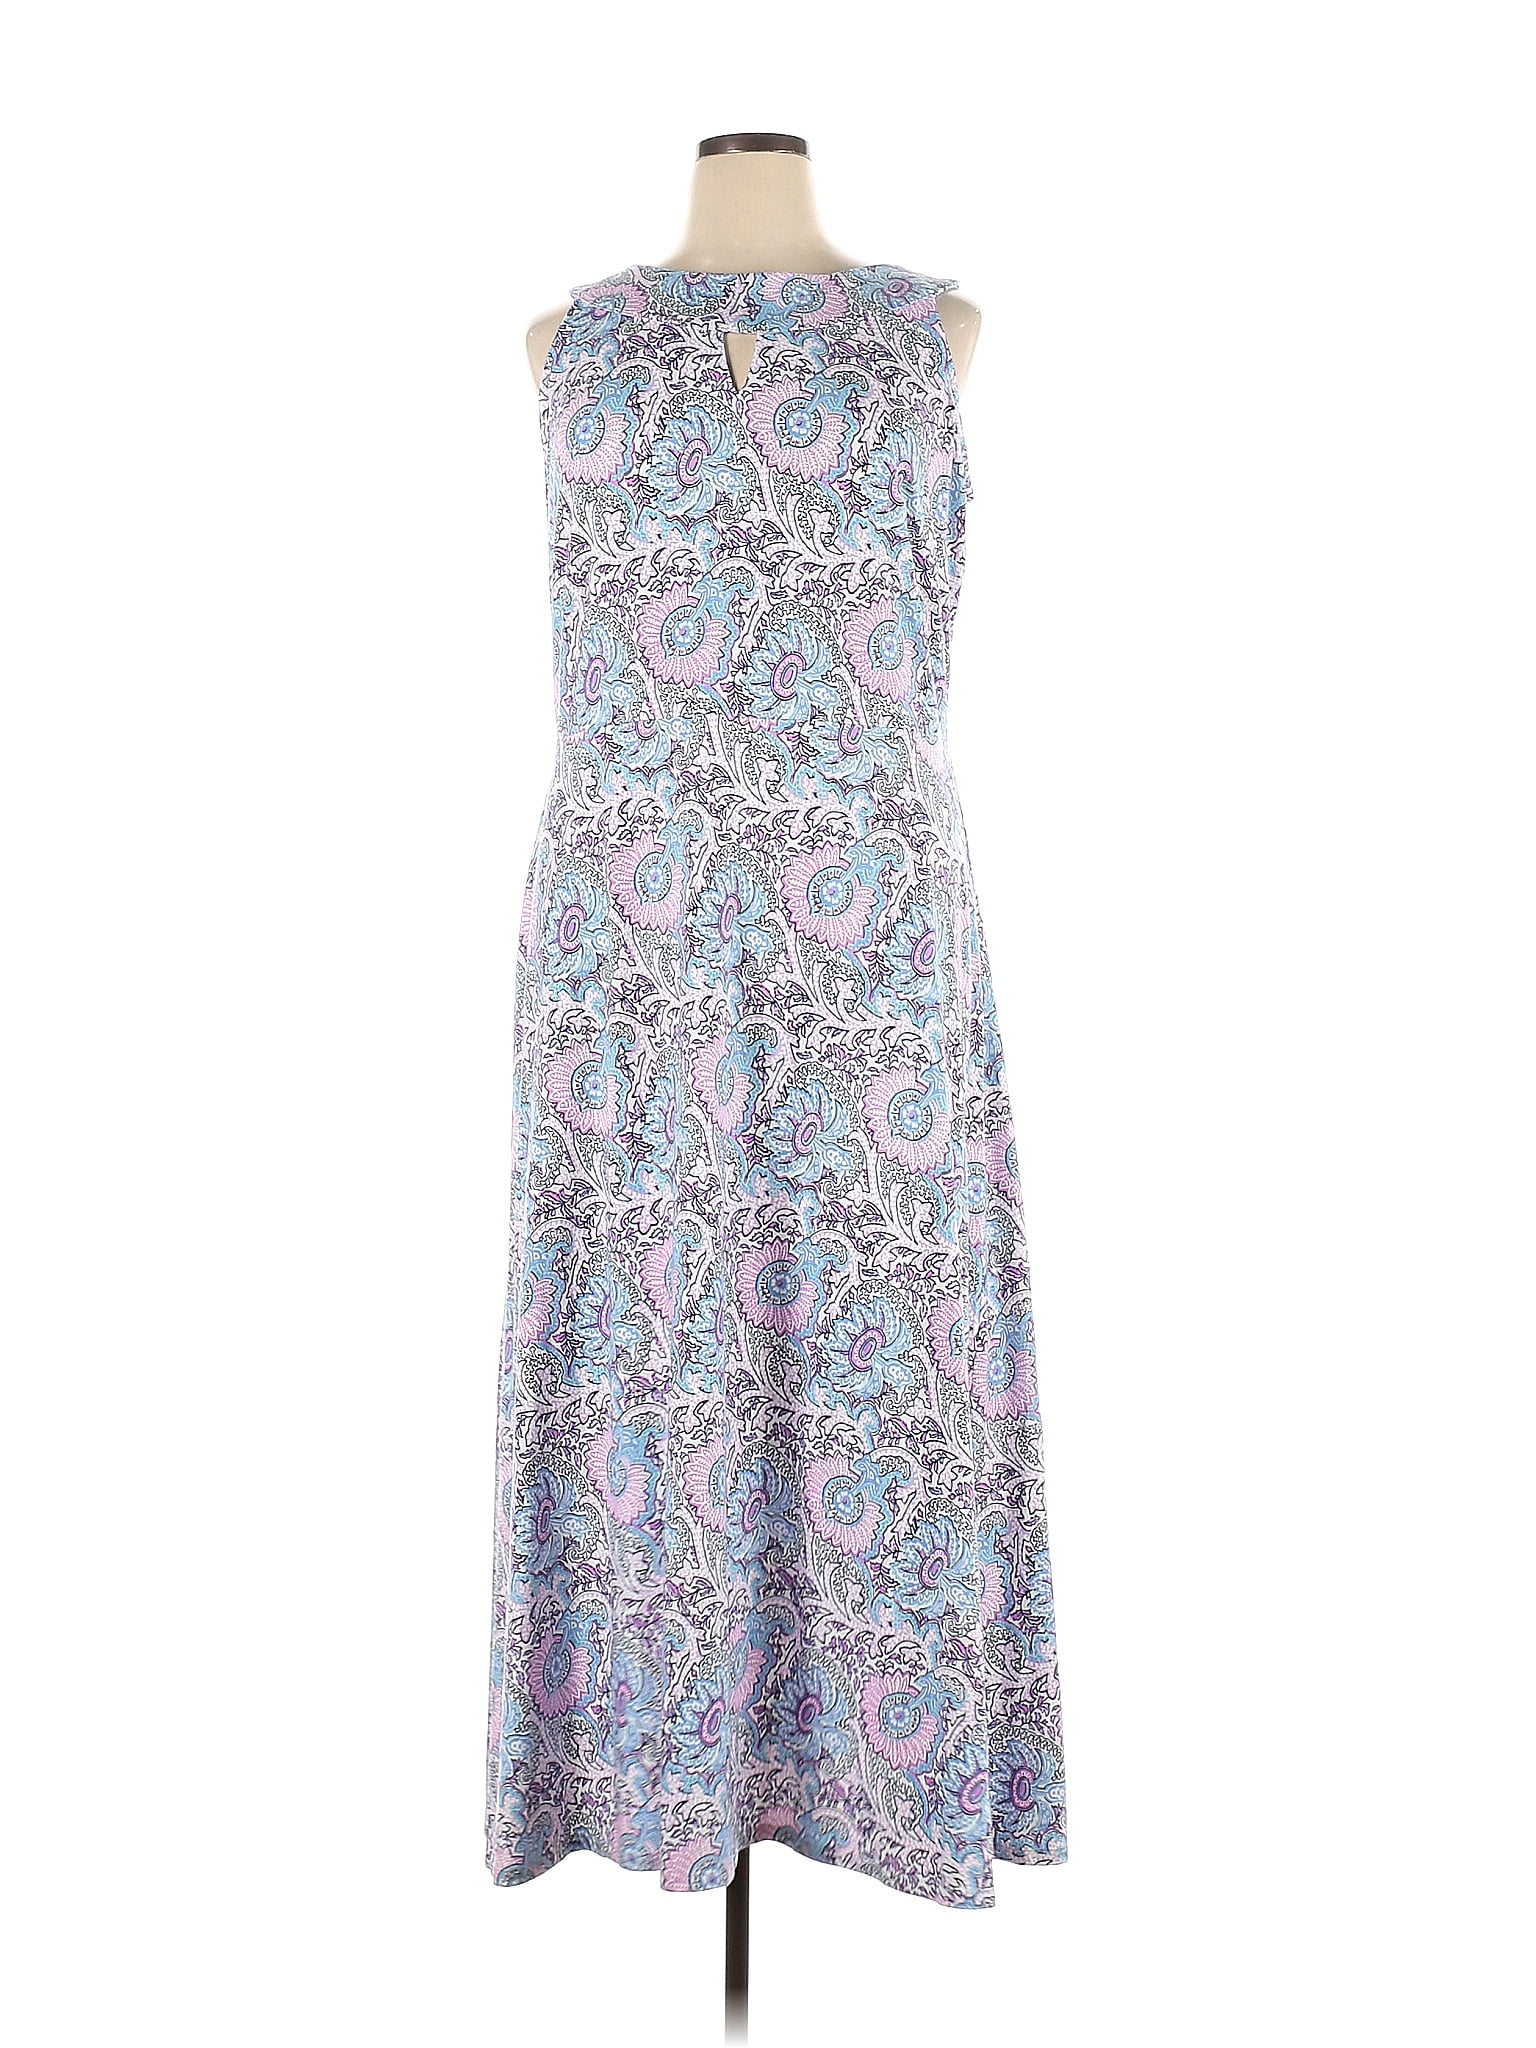 Talbots Multi Color Blue Casual Dress Size 1X (Plus) - 60% off | thredUP